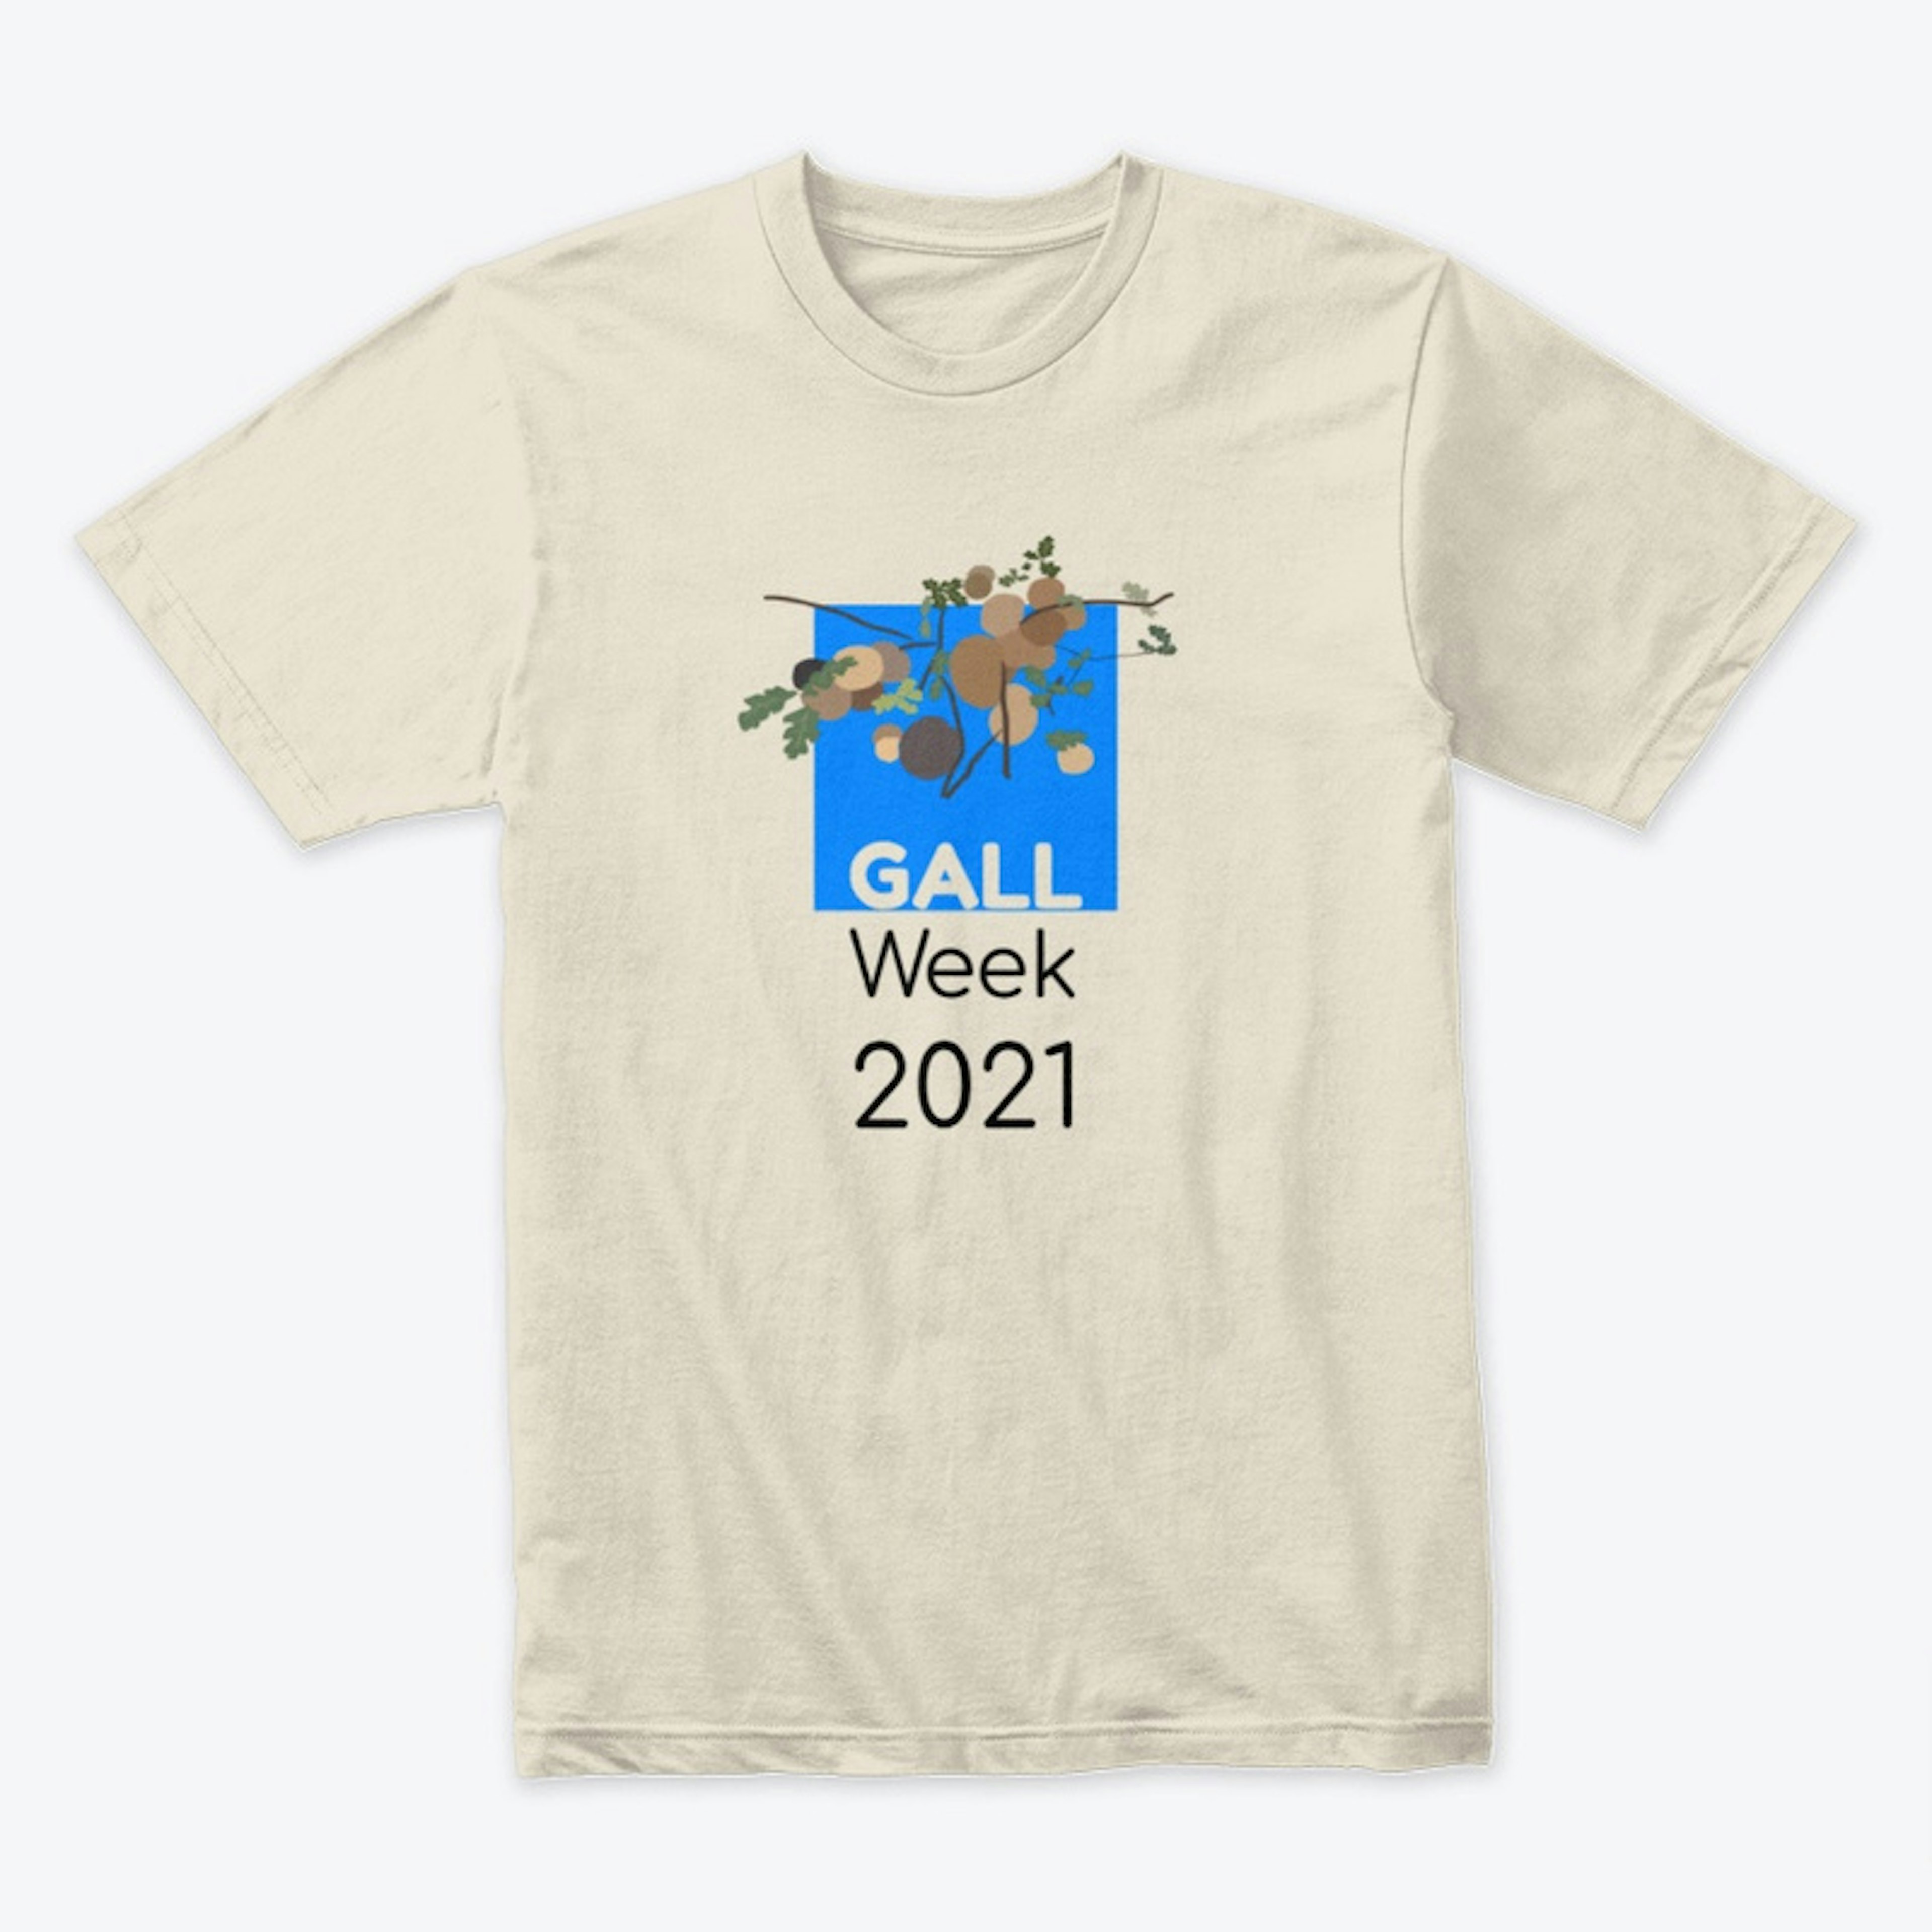 Gall Week 2021 T-shirt